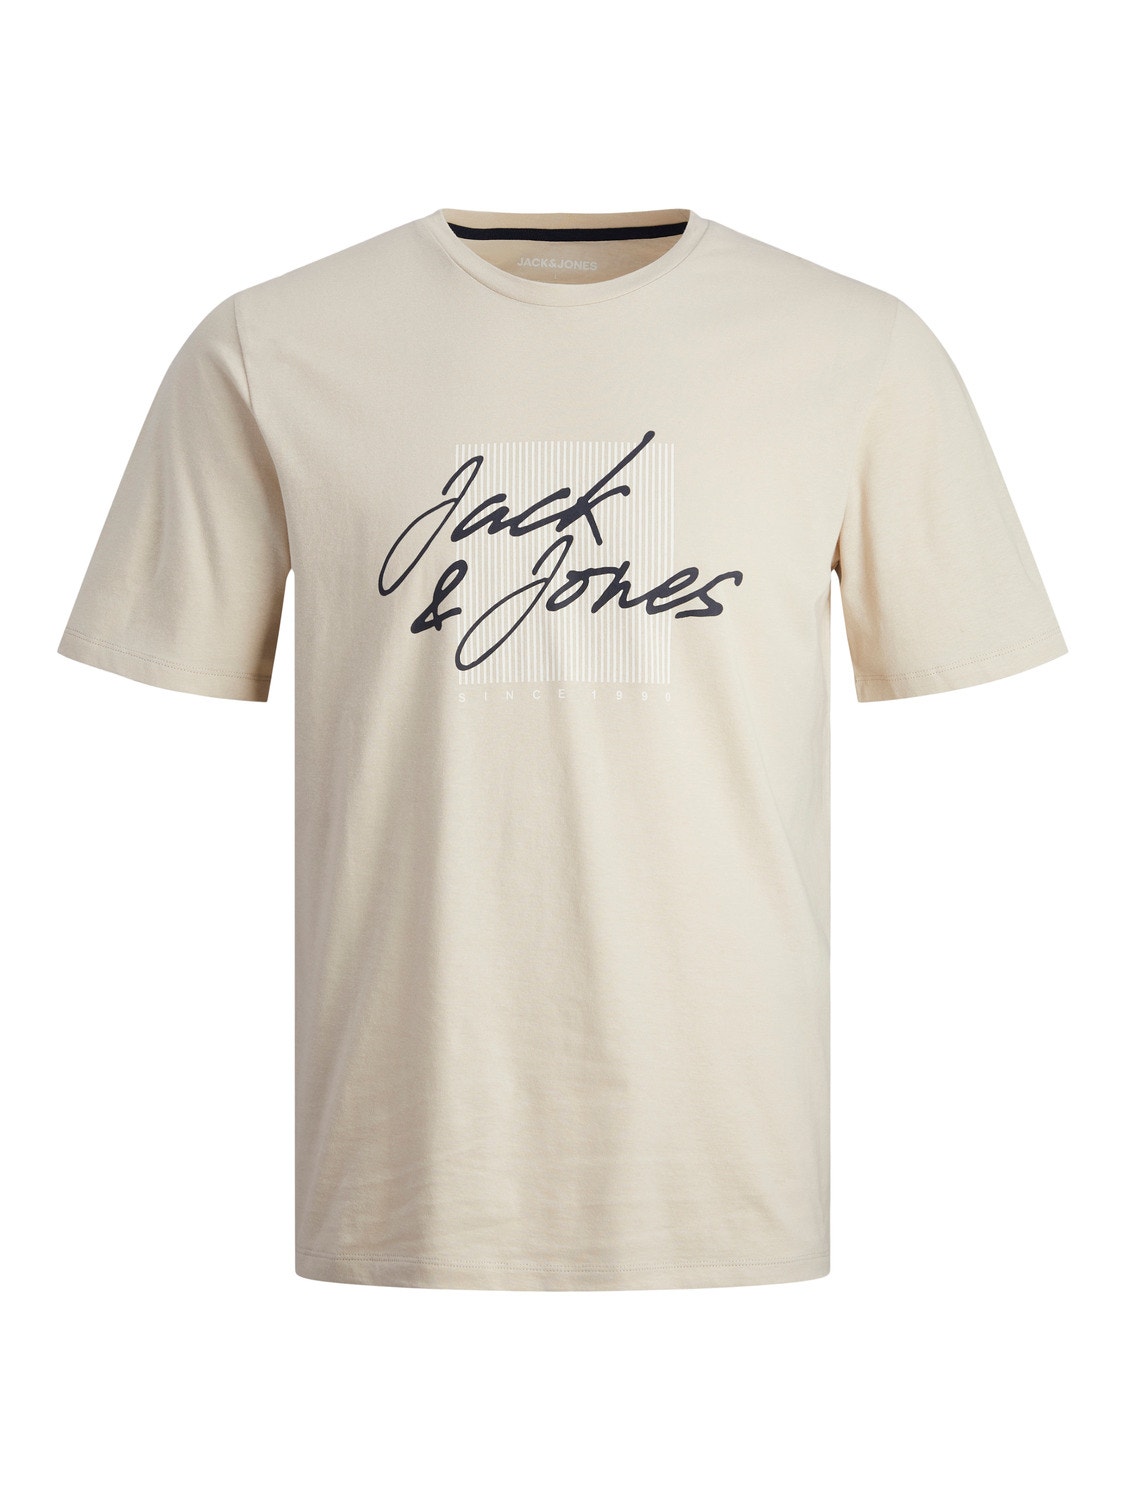 Jack & Jones T-shirt Con logo Girocollo -Moonbeam - 12247779